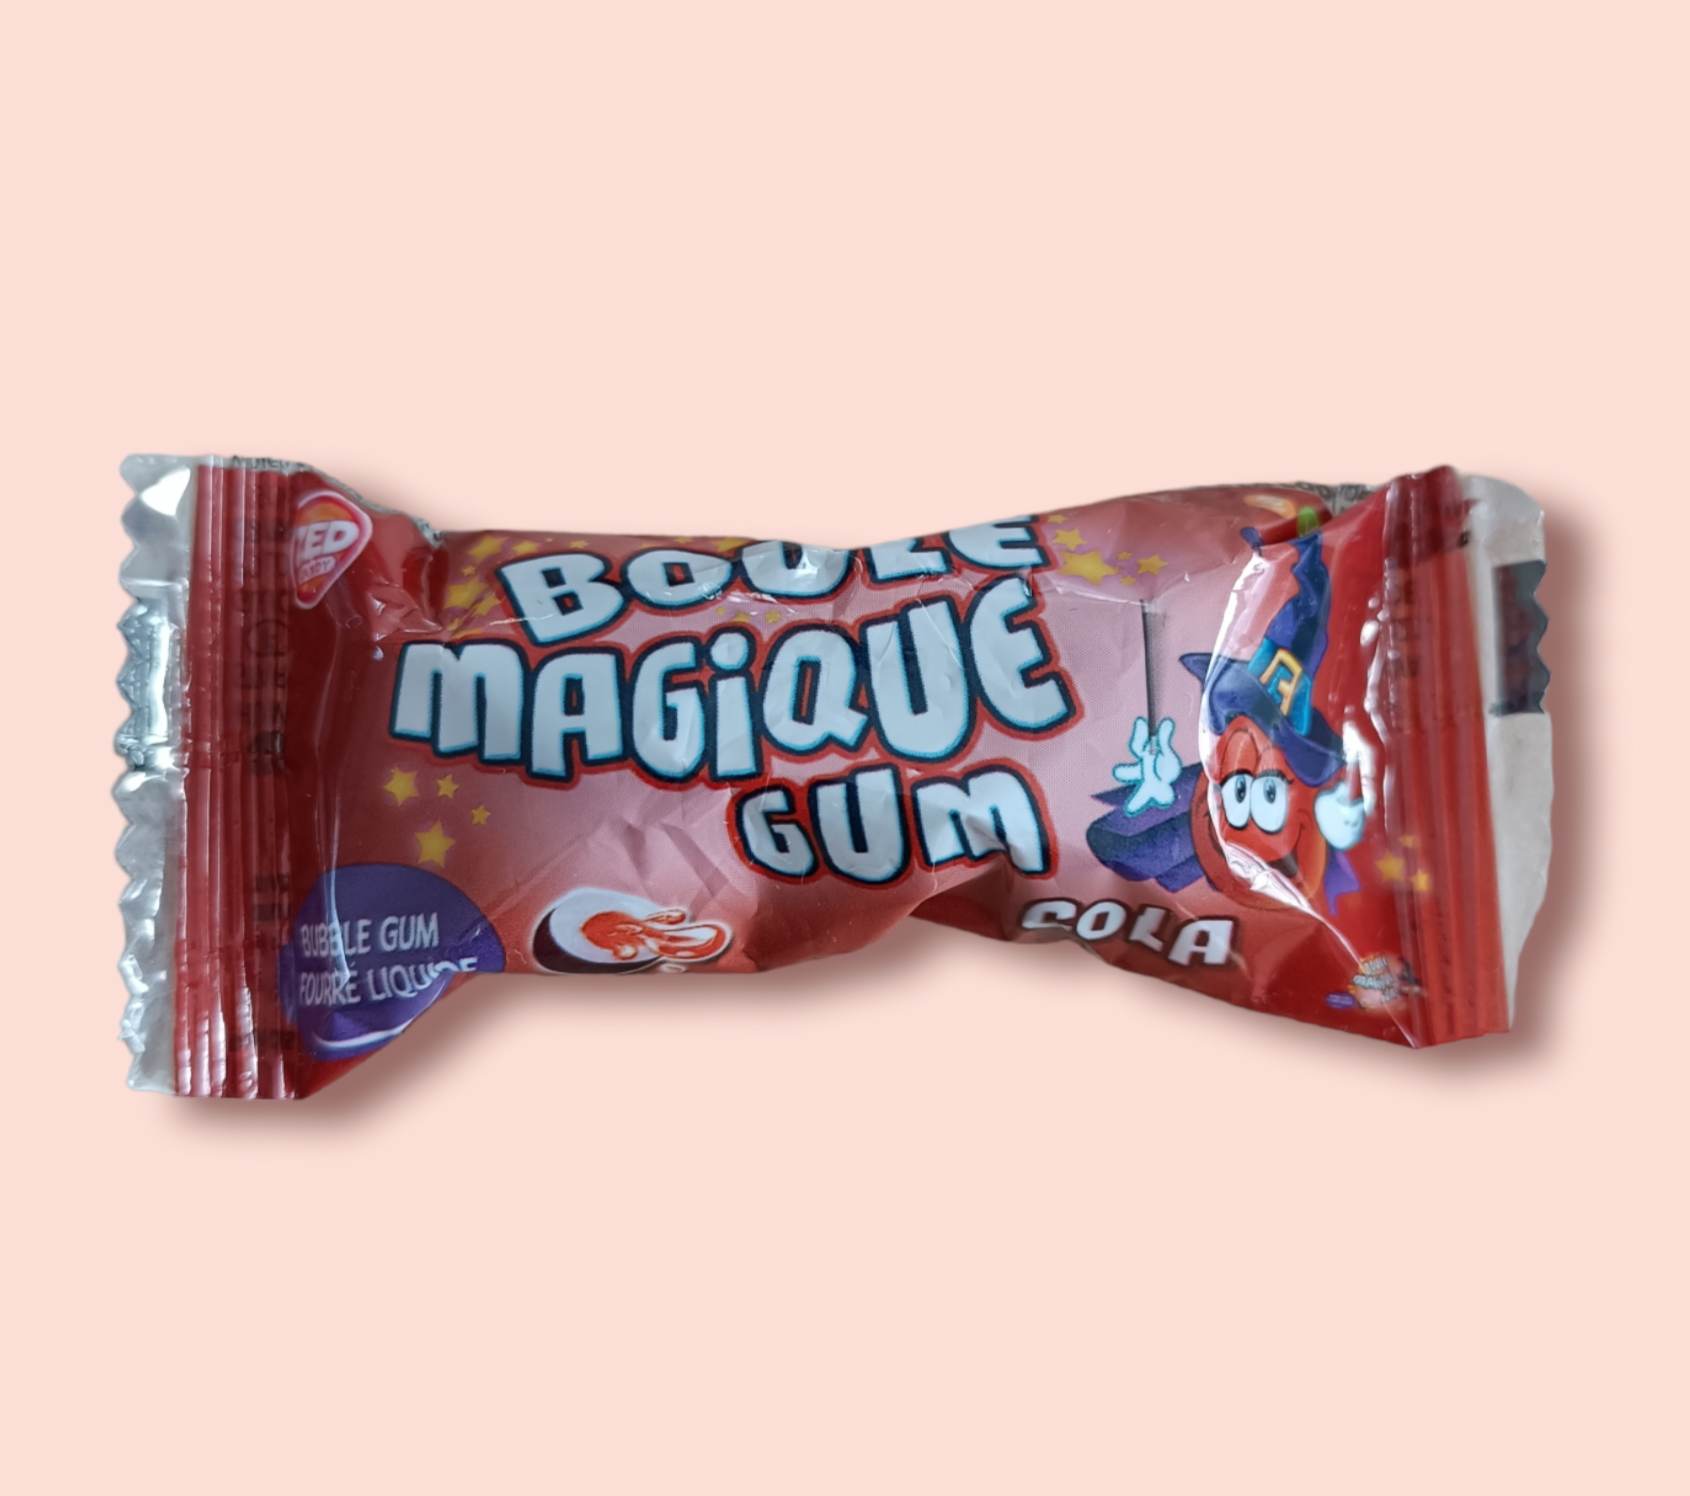 Chewing-gum Malabar (goût cola) x5